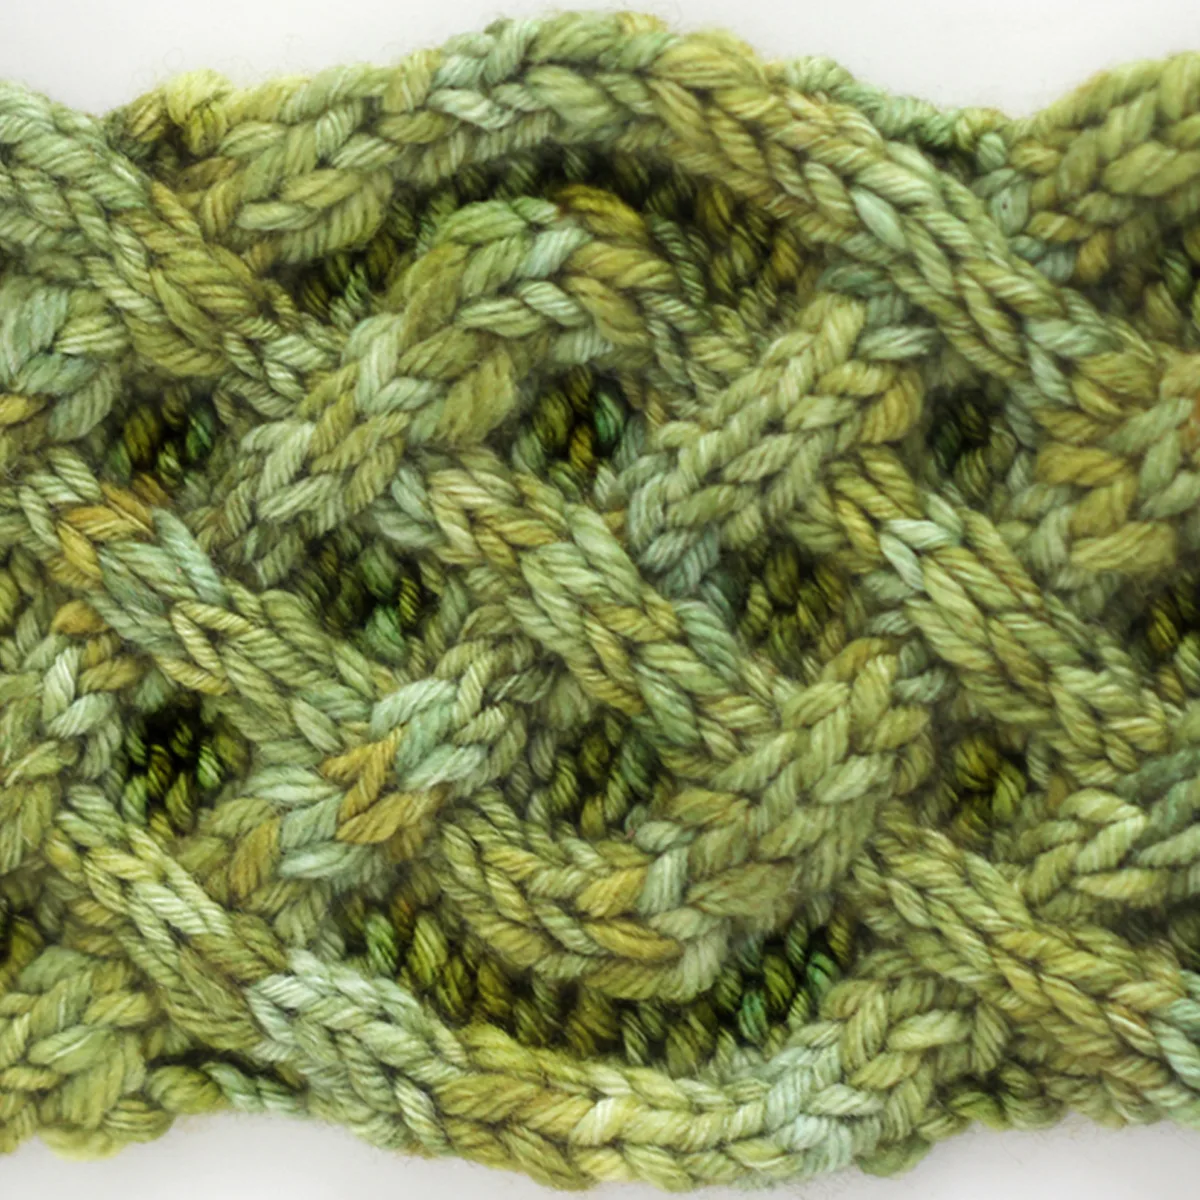 Seven Seas Cable Stitch Knitting Pattern - Studio Knit